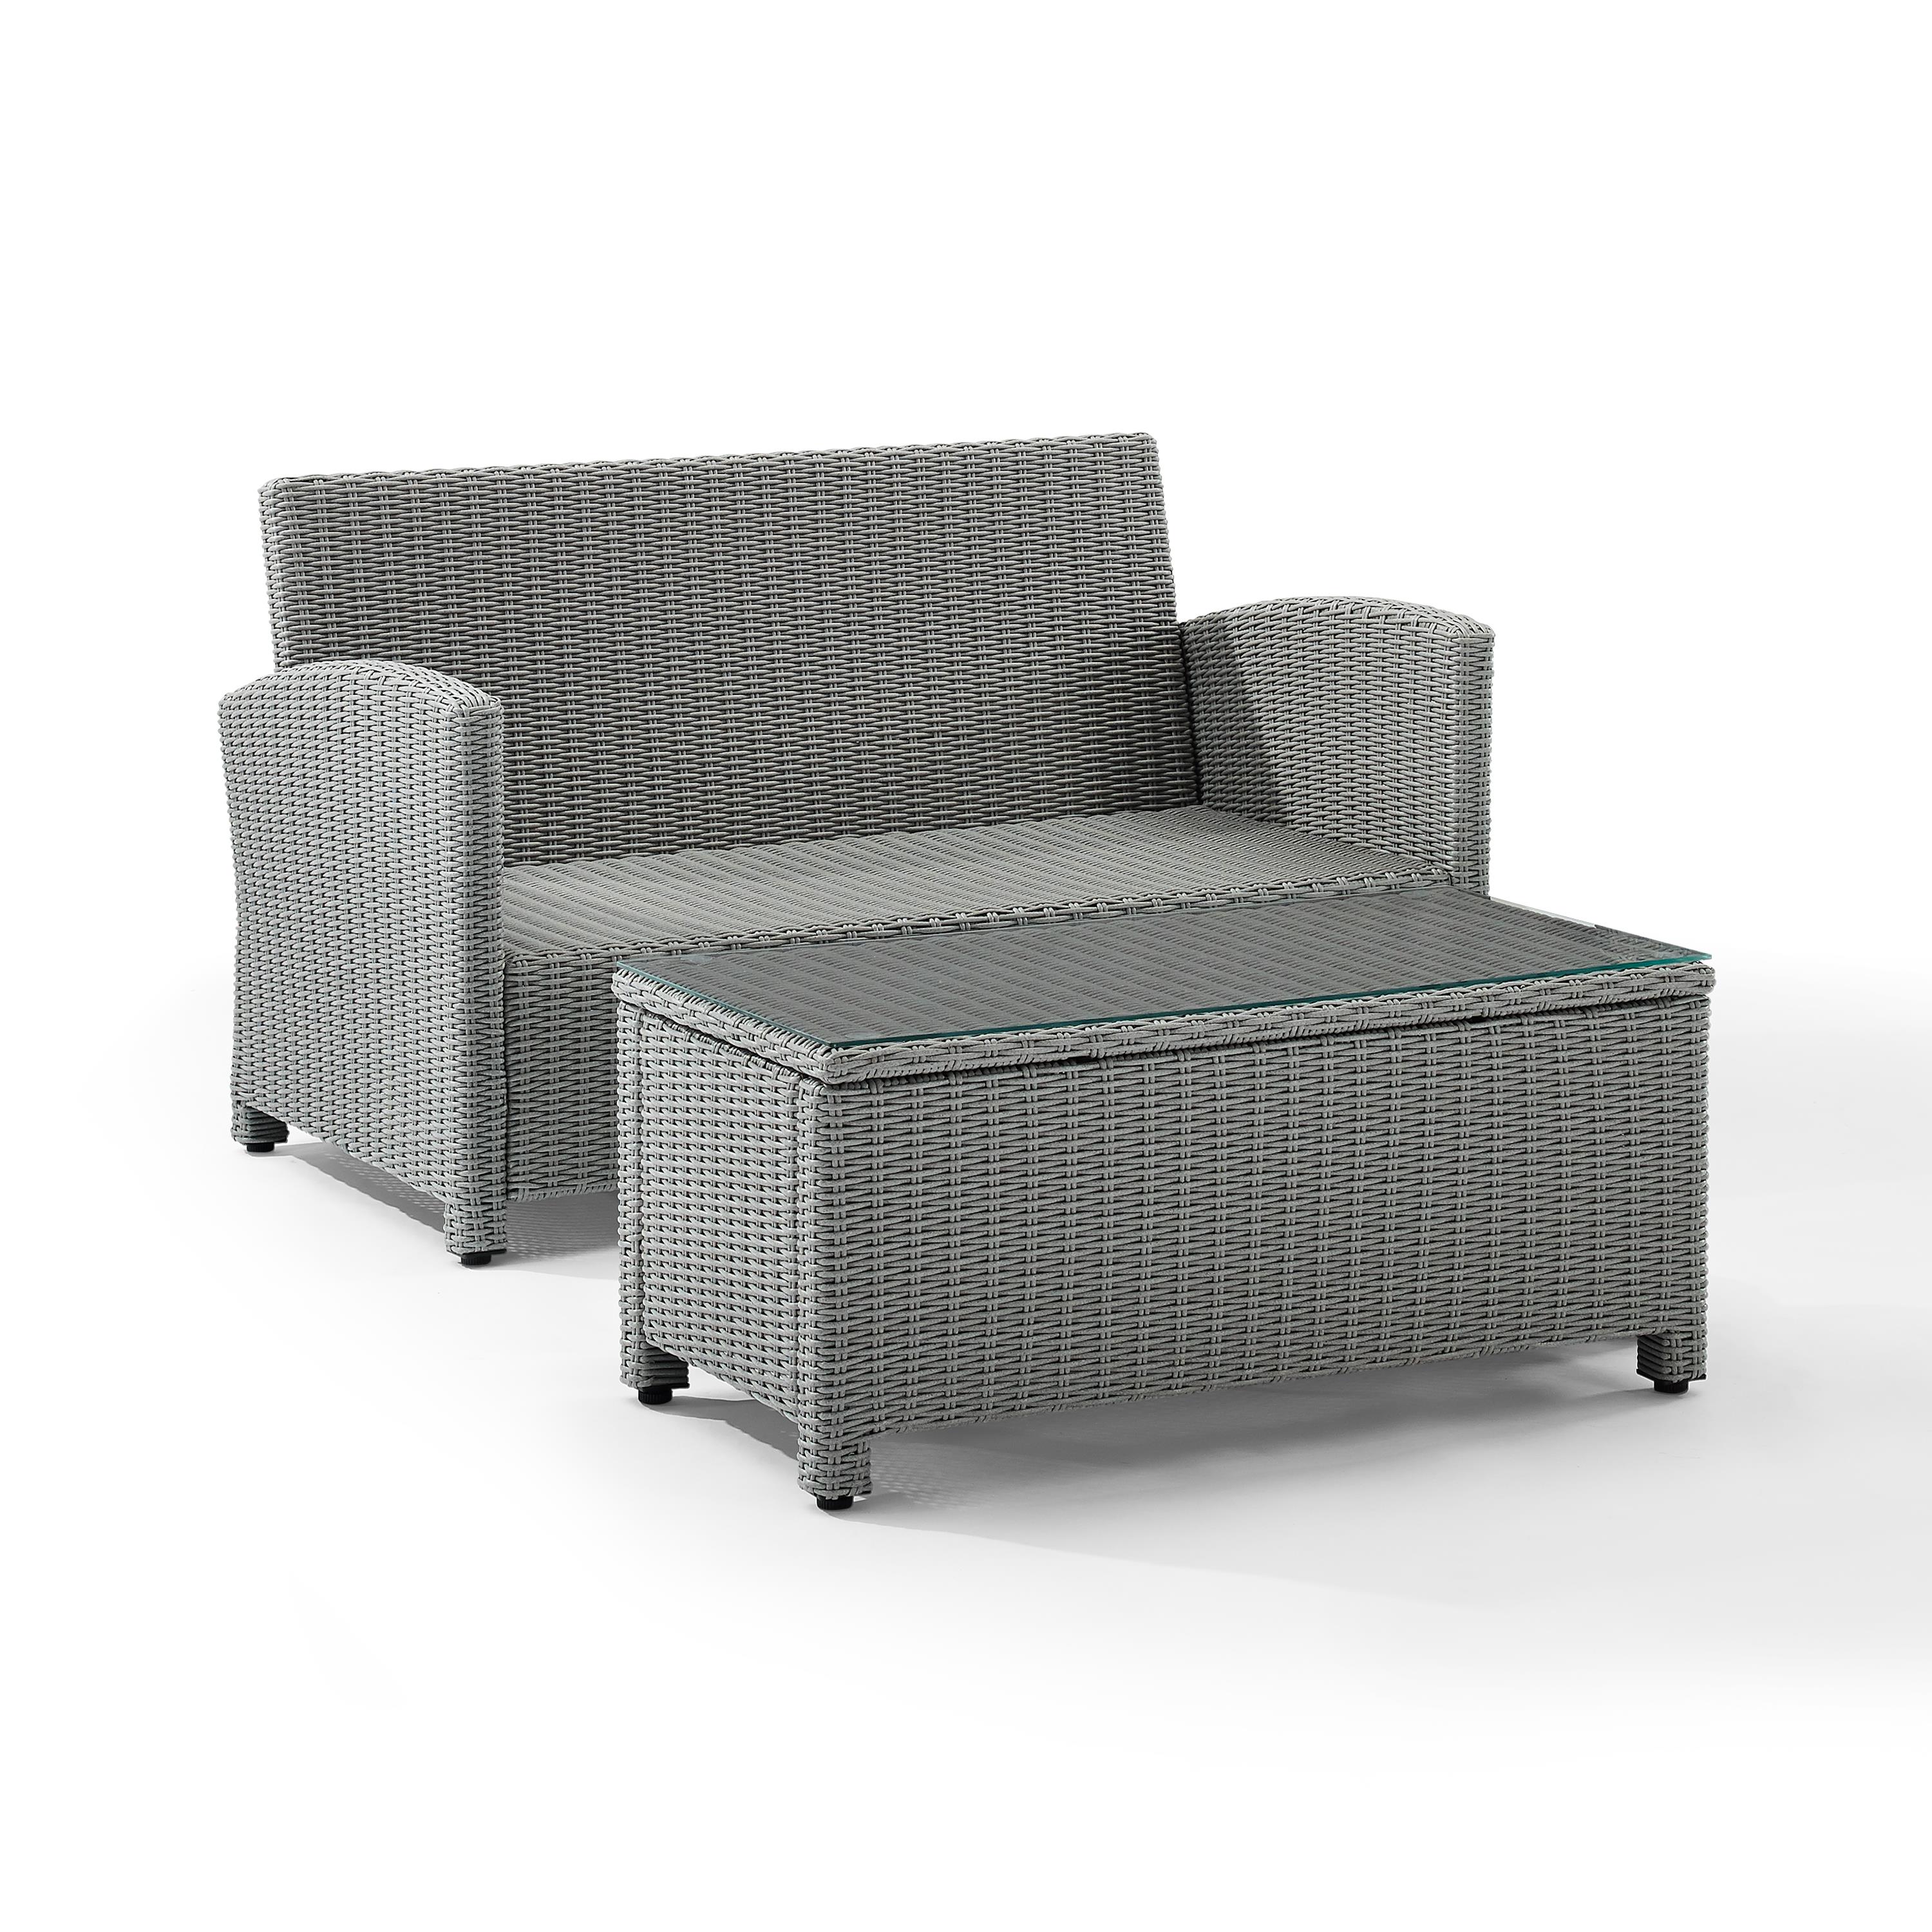 Crosley Bradenton 2 Piece Wicker Patio Sofa Set in Gray - image 4 of 7